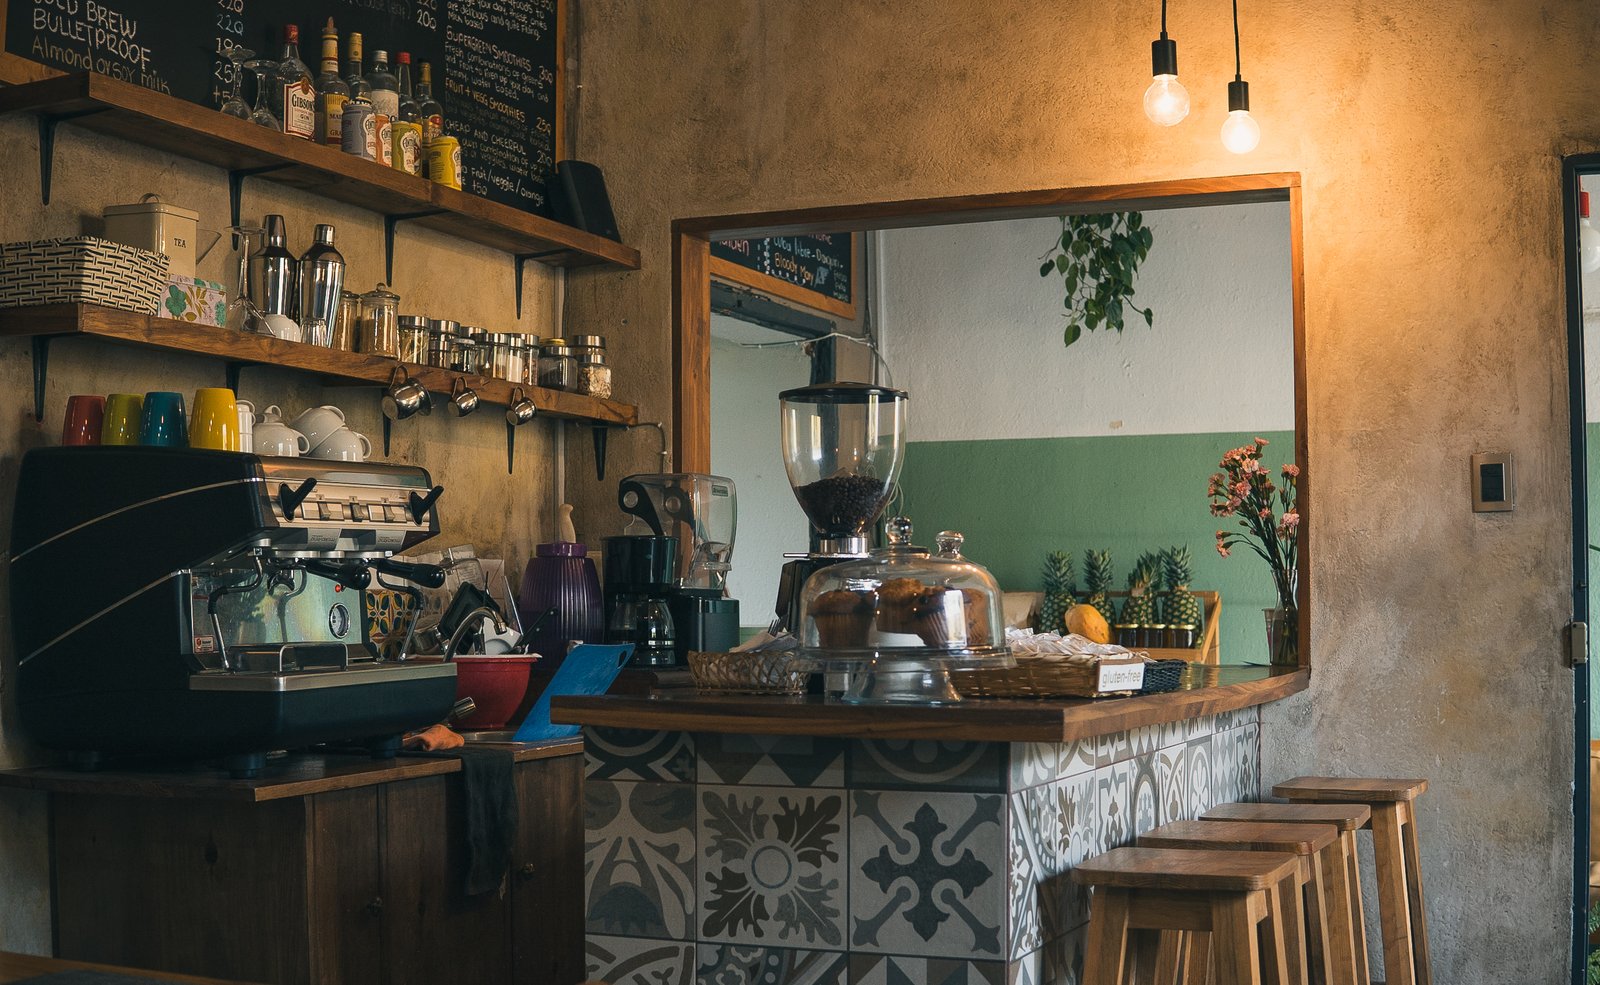 PARA UN BUEN CAFÉ VISITA ESTAS CAFETERÍAS EN GUATEMALA